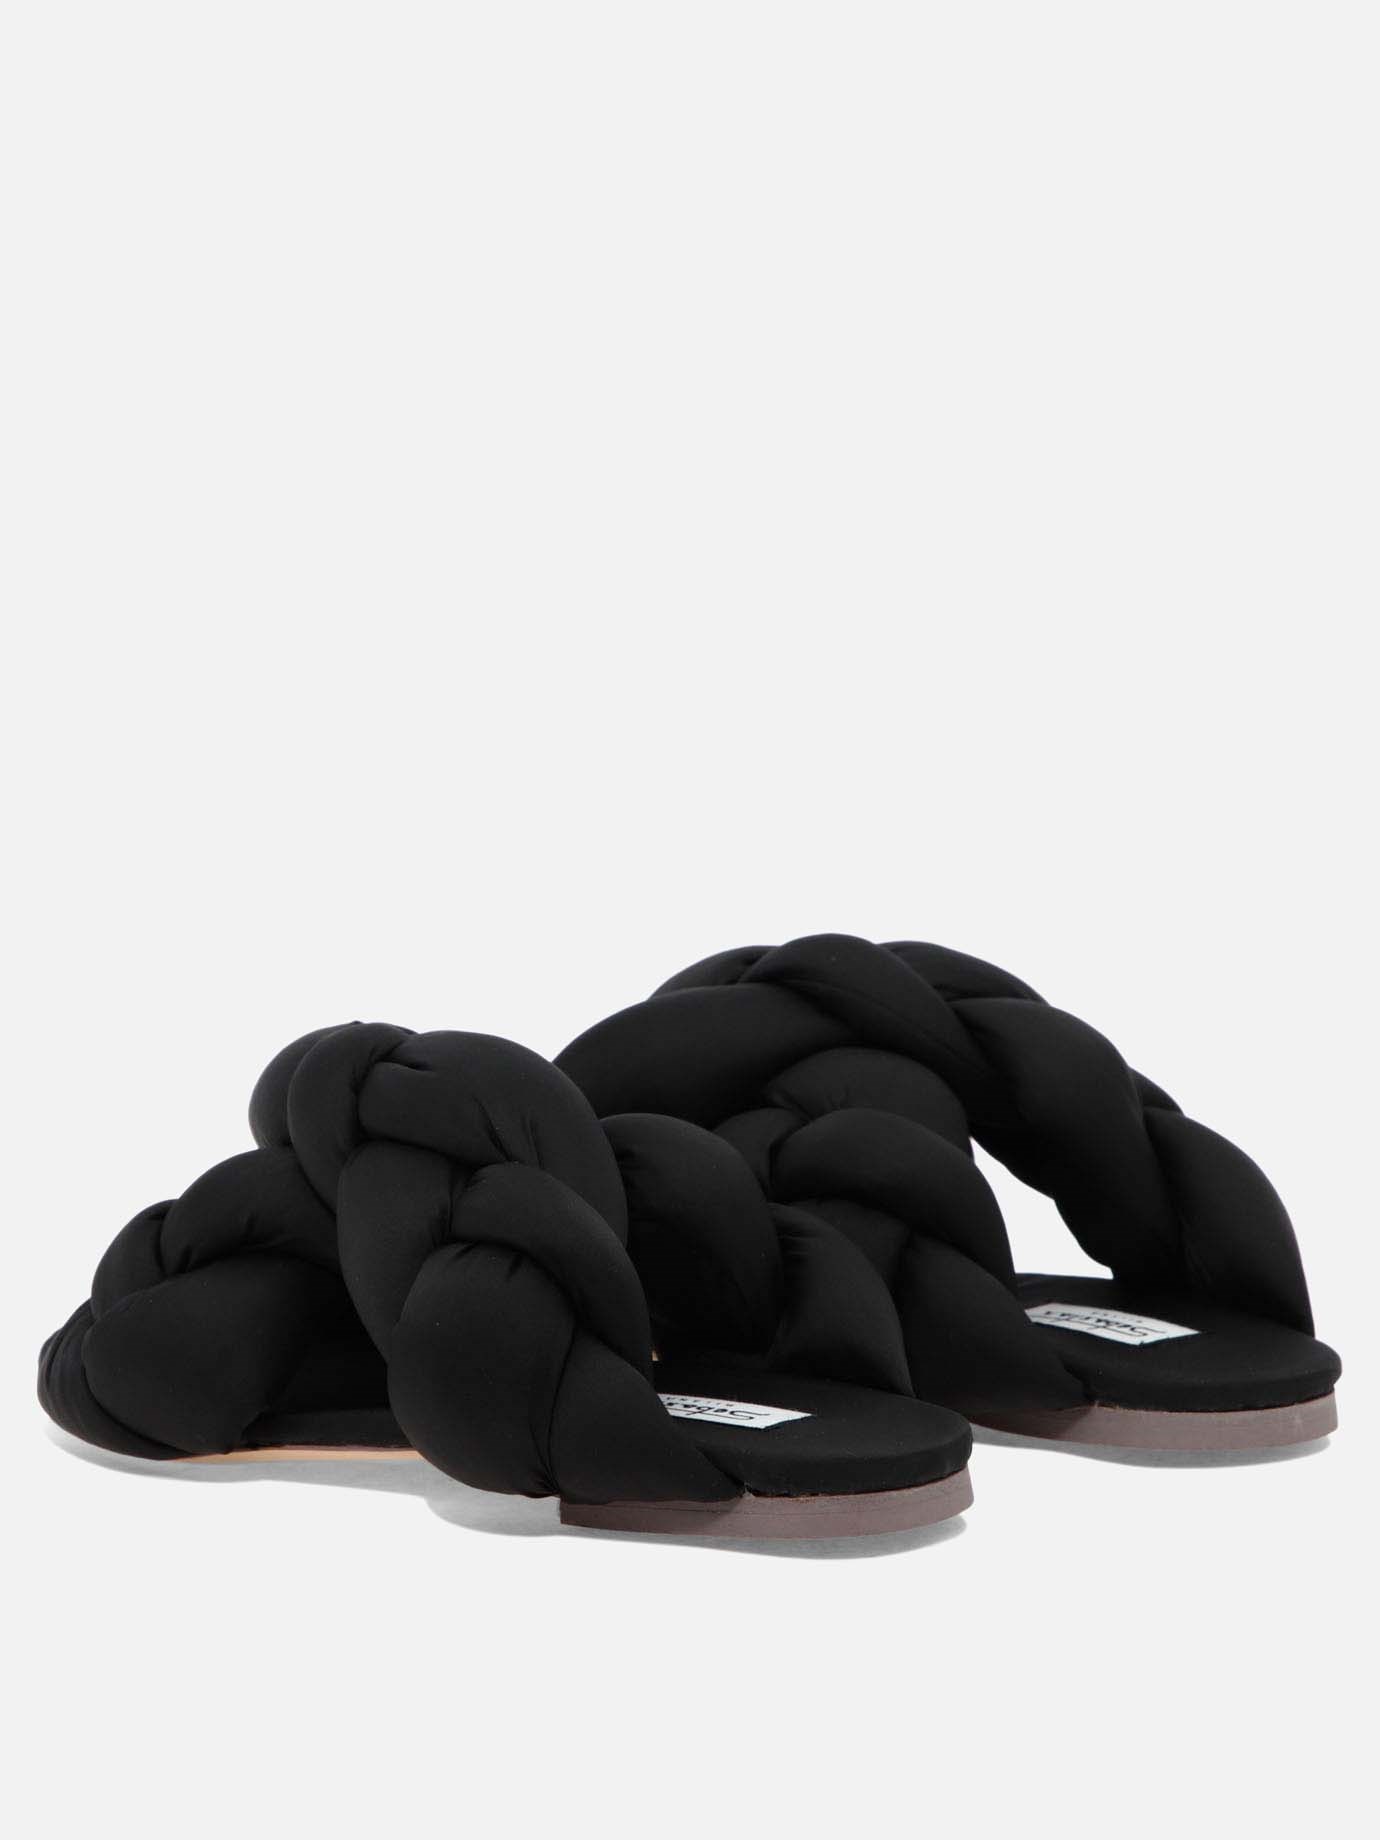  Untangled  sandals by Sebastian Milano